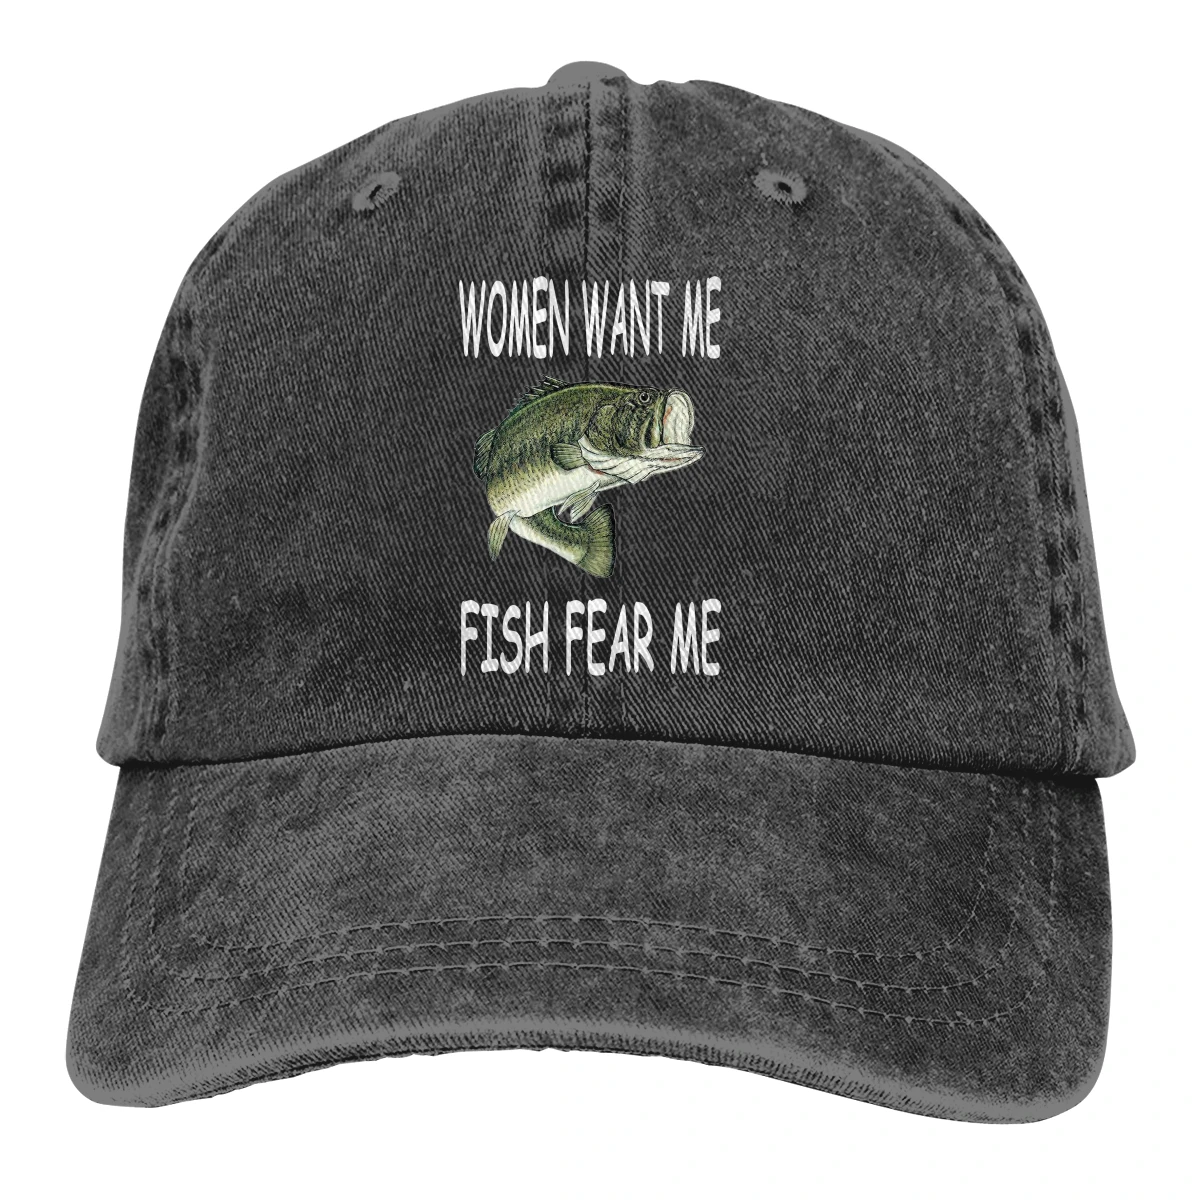 Denim Baseball Cap Men Women Want Me Fish Fear Me Snapback Hat Summer Sports Hip Hop Hats Caps Gorras